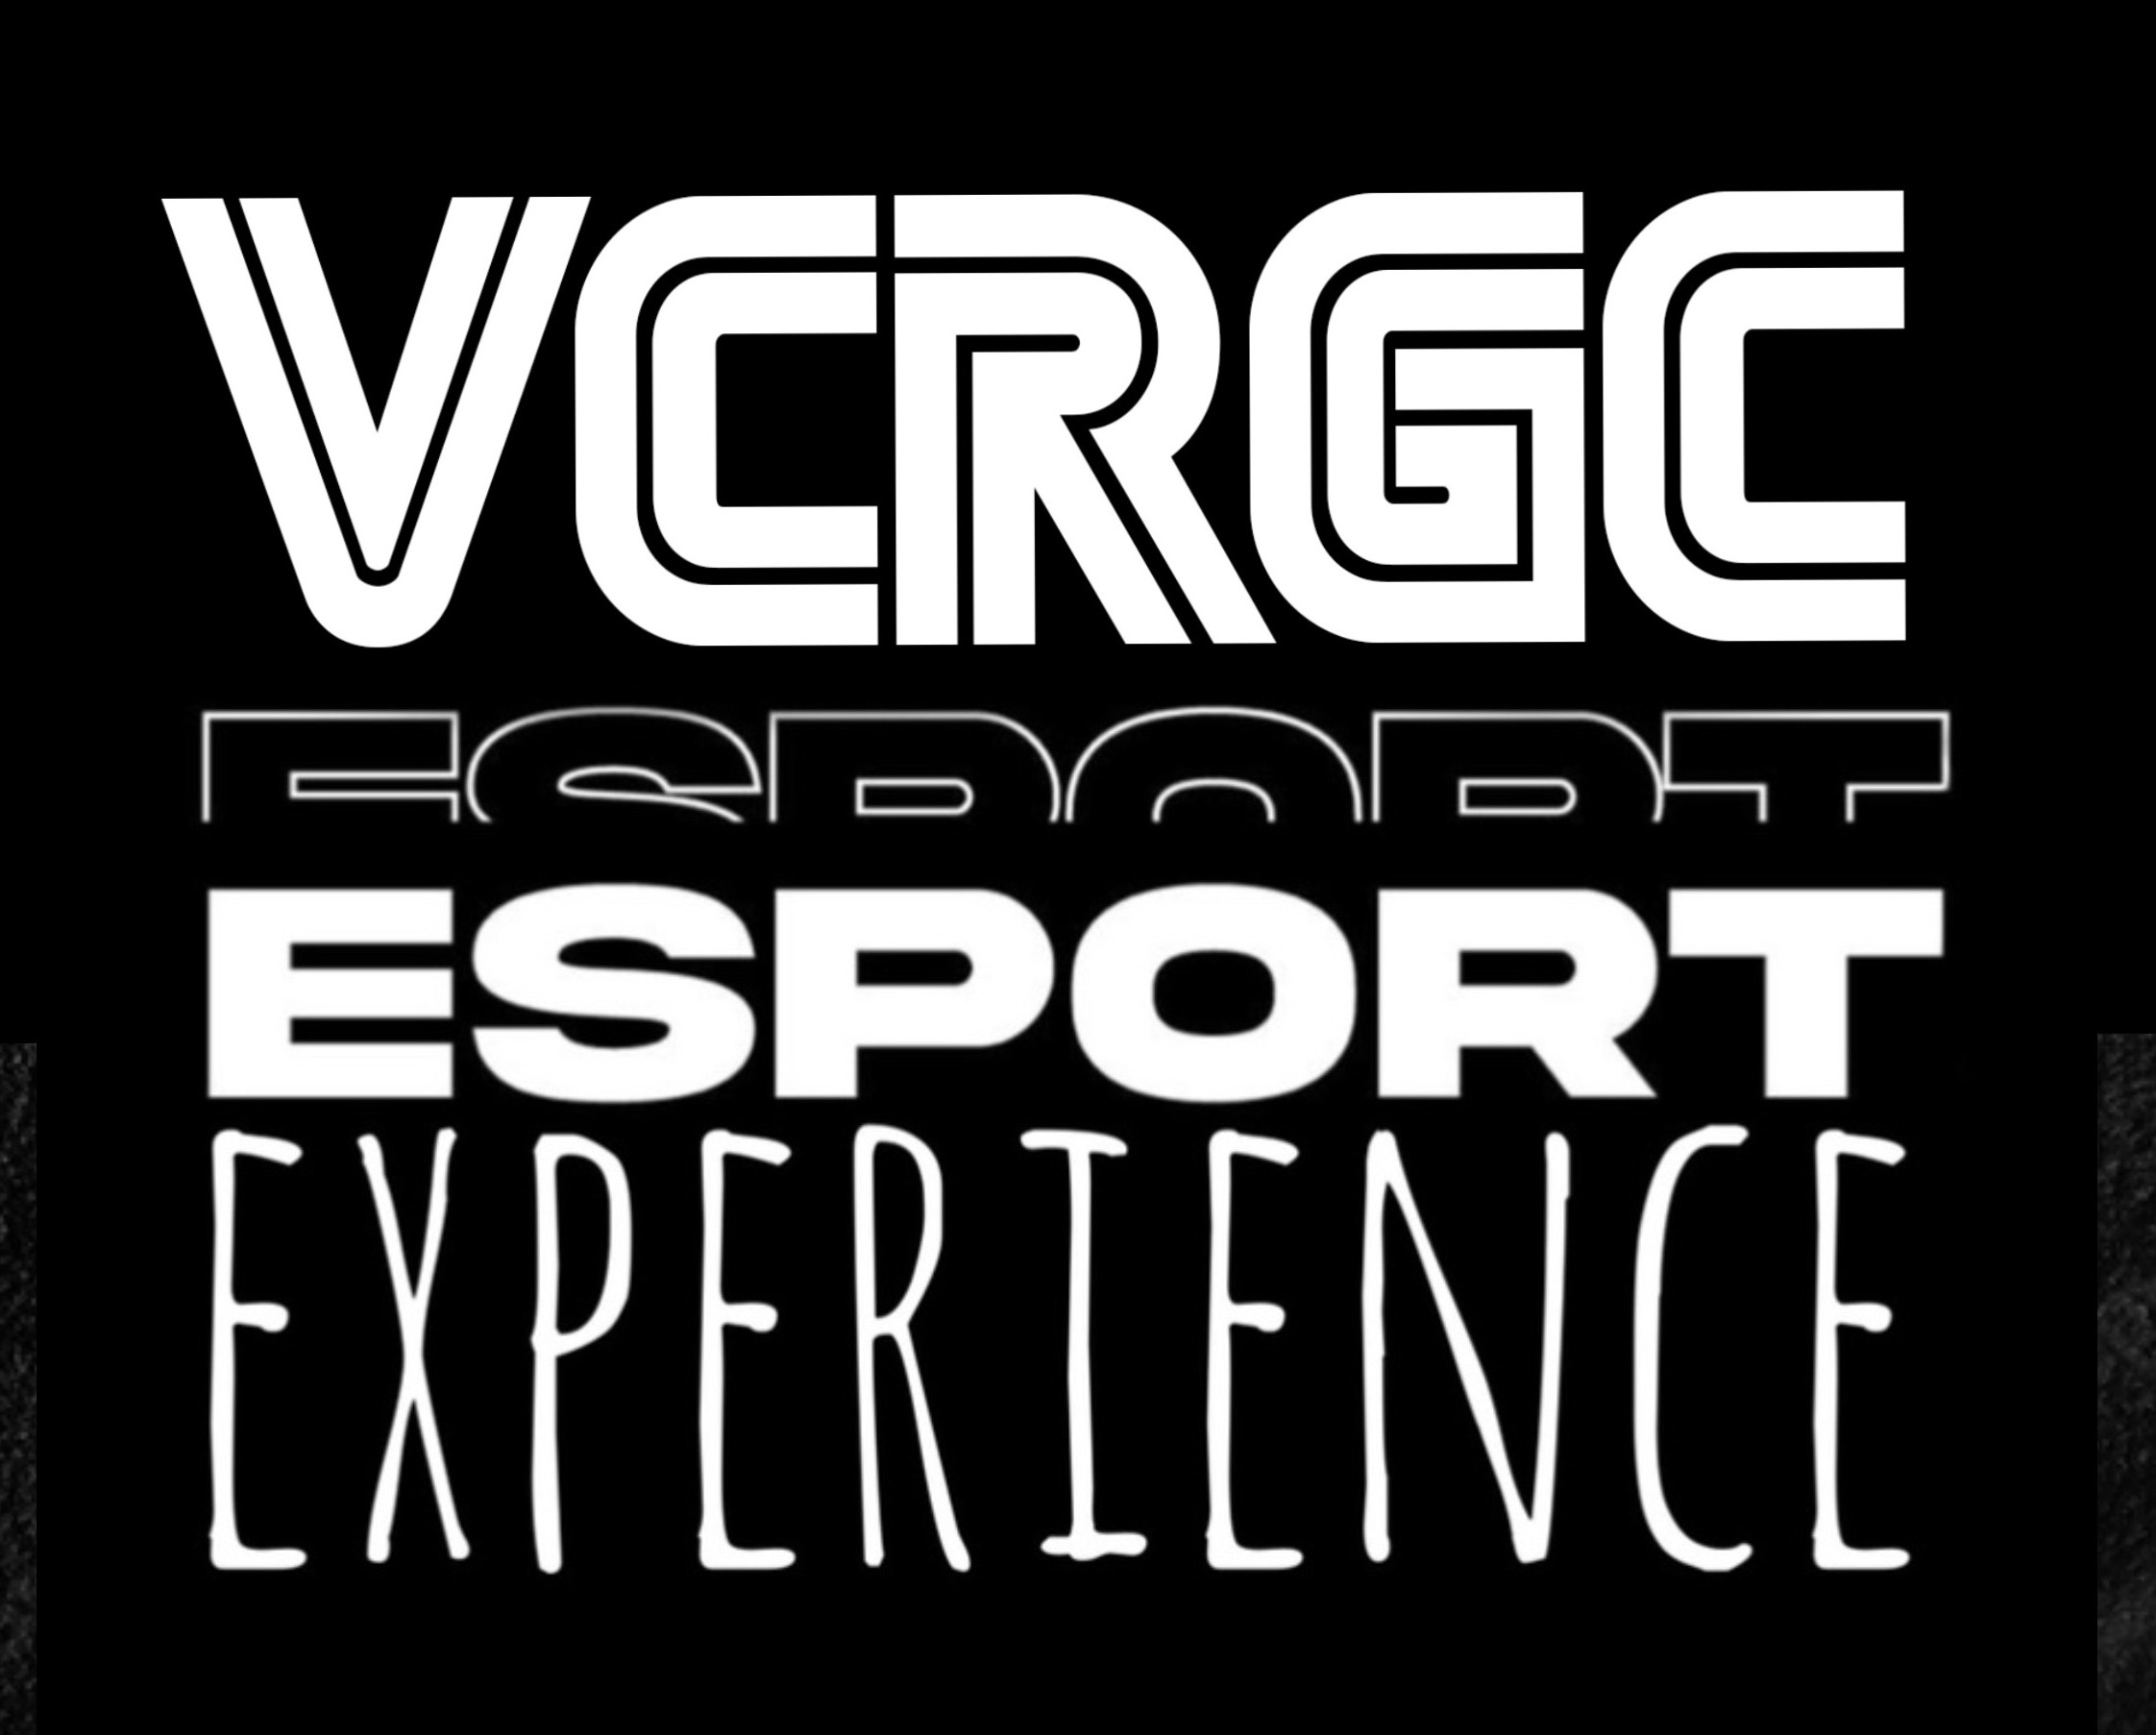 VCRGC E-Sport Experience